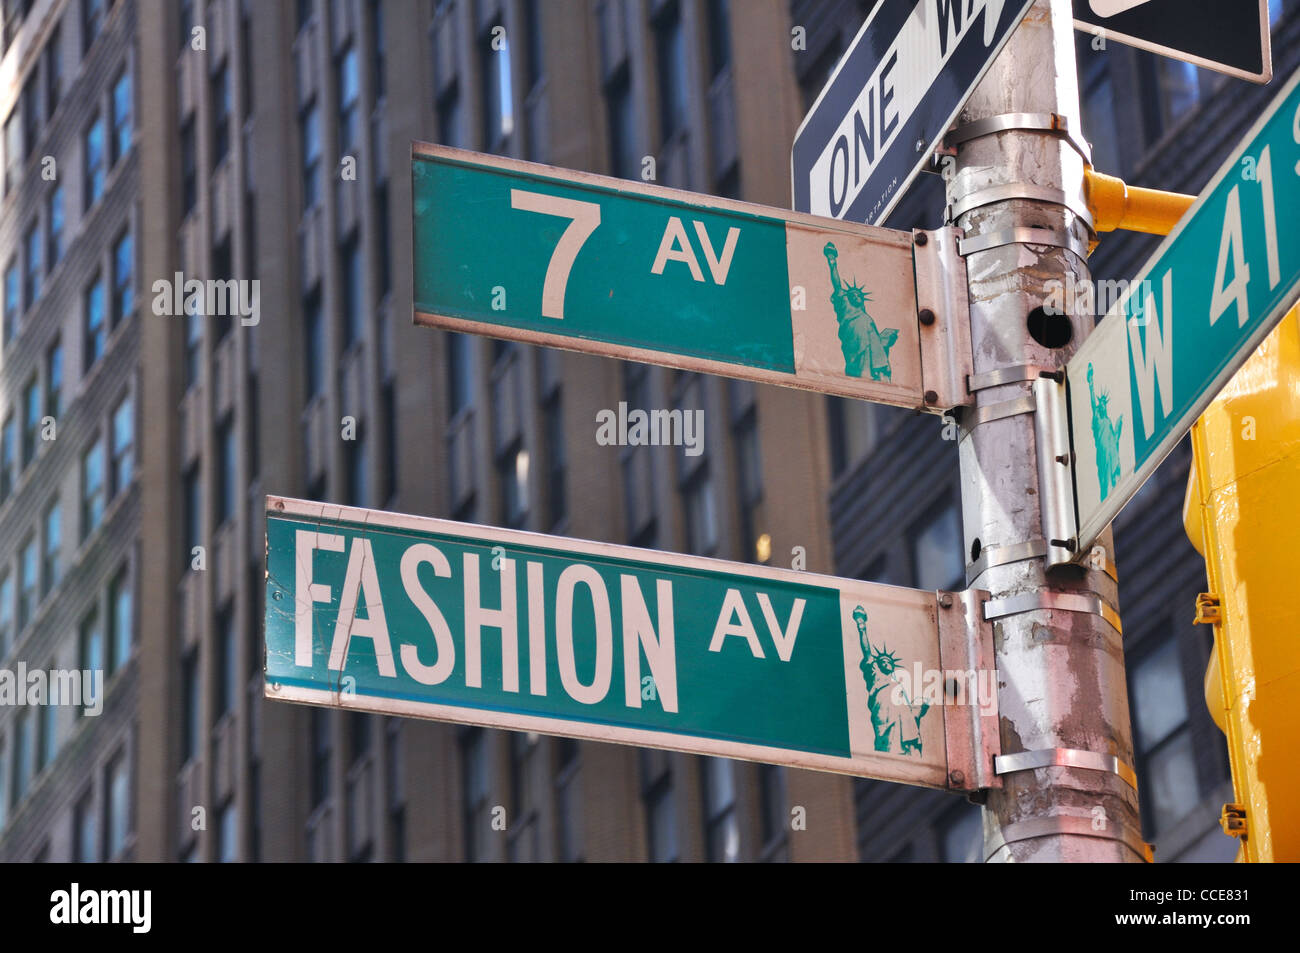 Fashion Avenue and 7th Avenue street signs, New York, USA Stock Photo -  Alamy